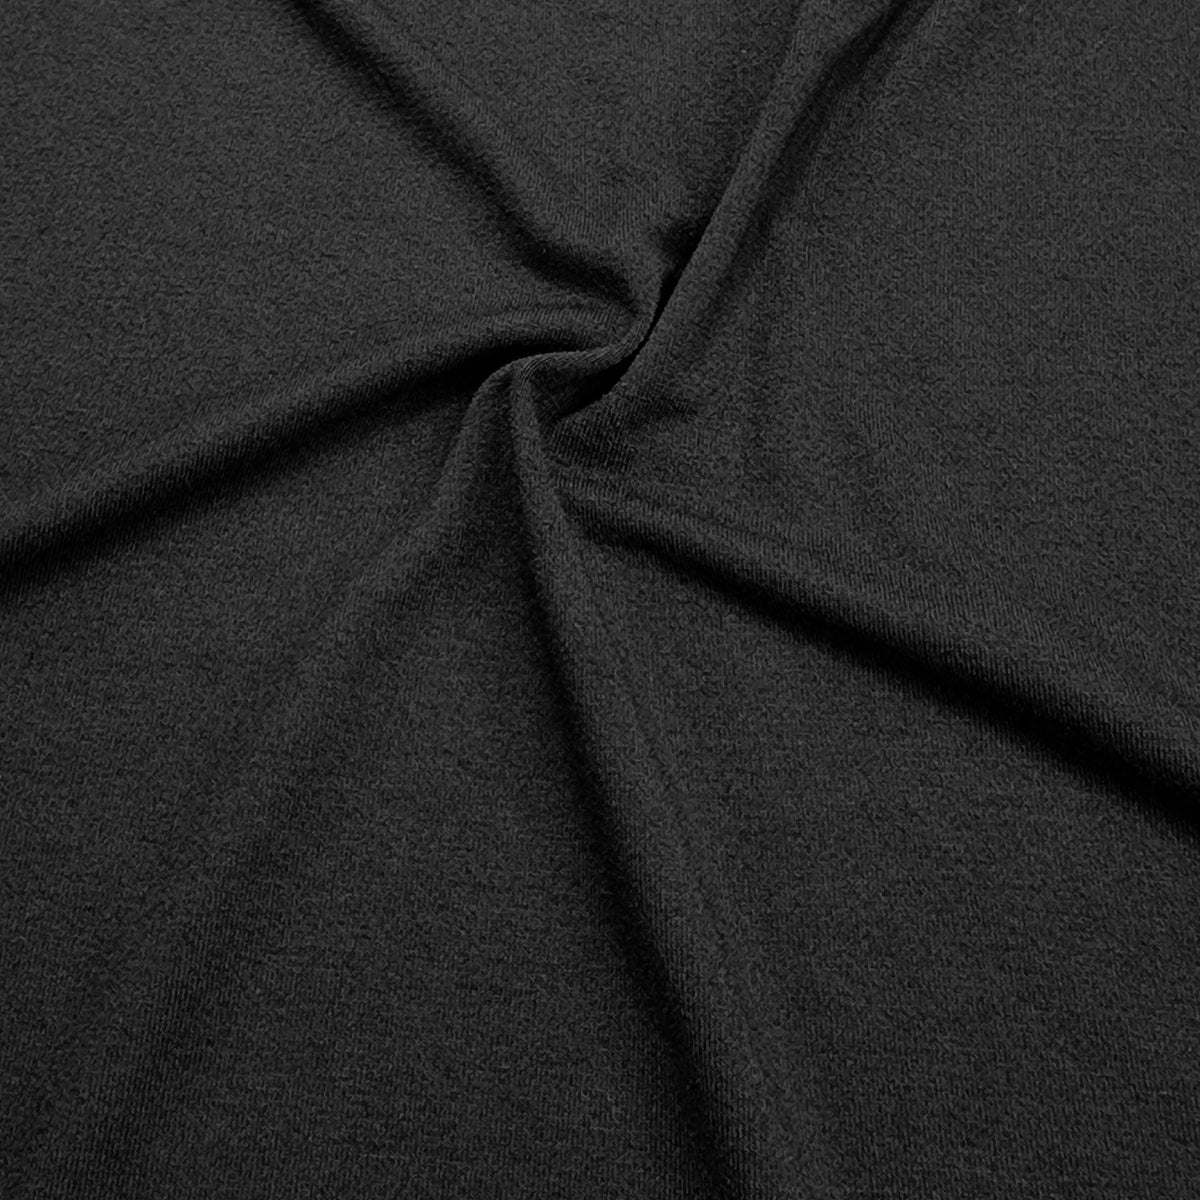 Modal Jersey Fabric - Black